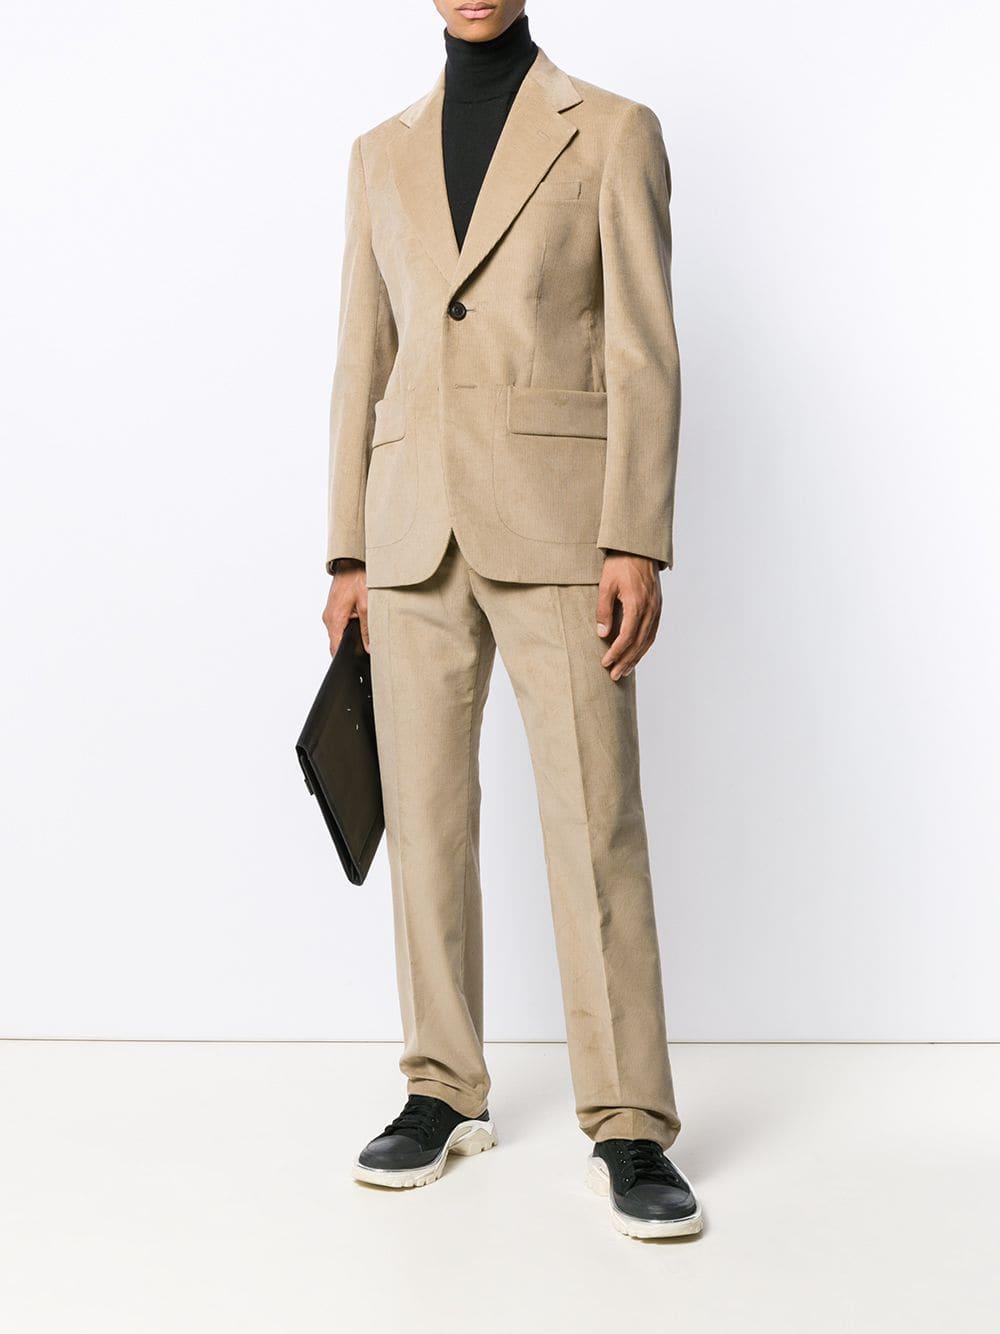 Maison Margiela Corduroy Two-piece Suit in Natural for Men - Lyst